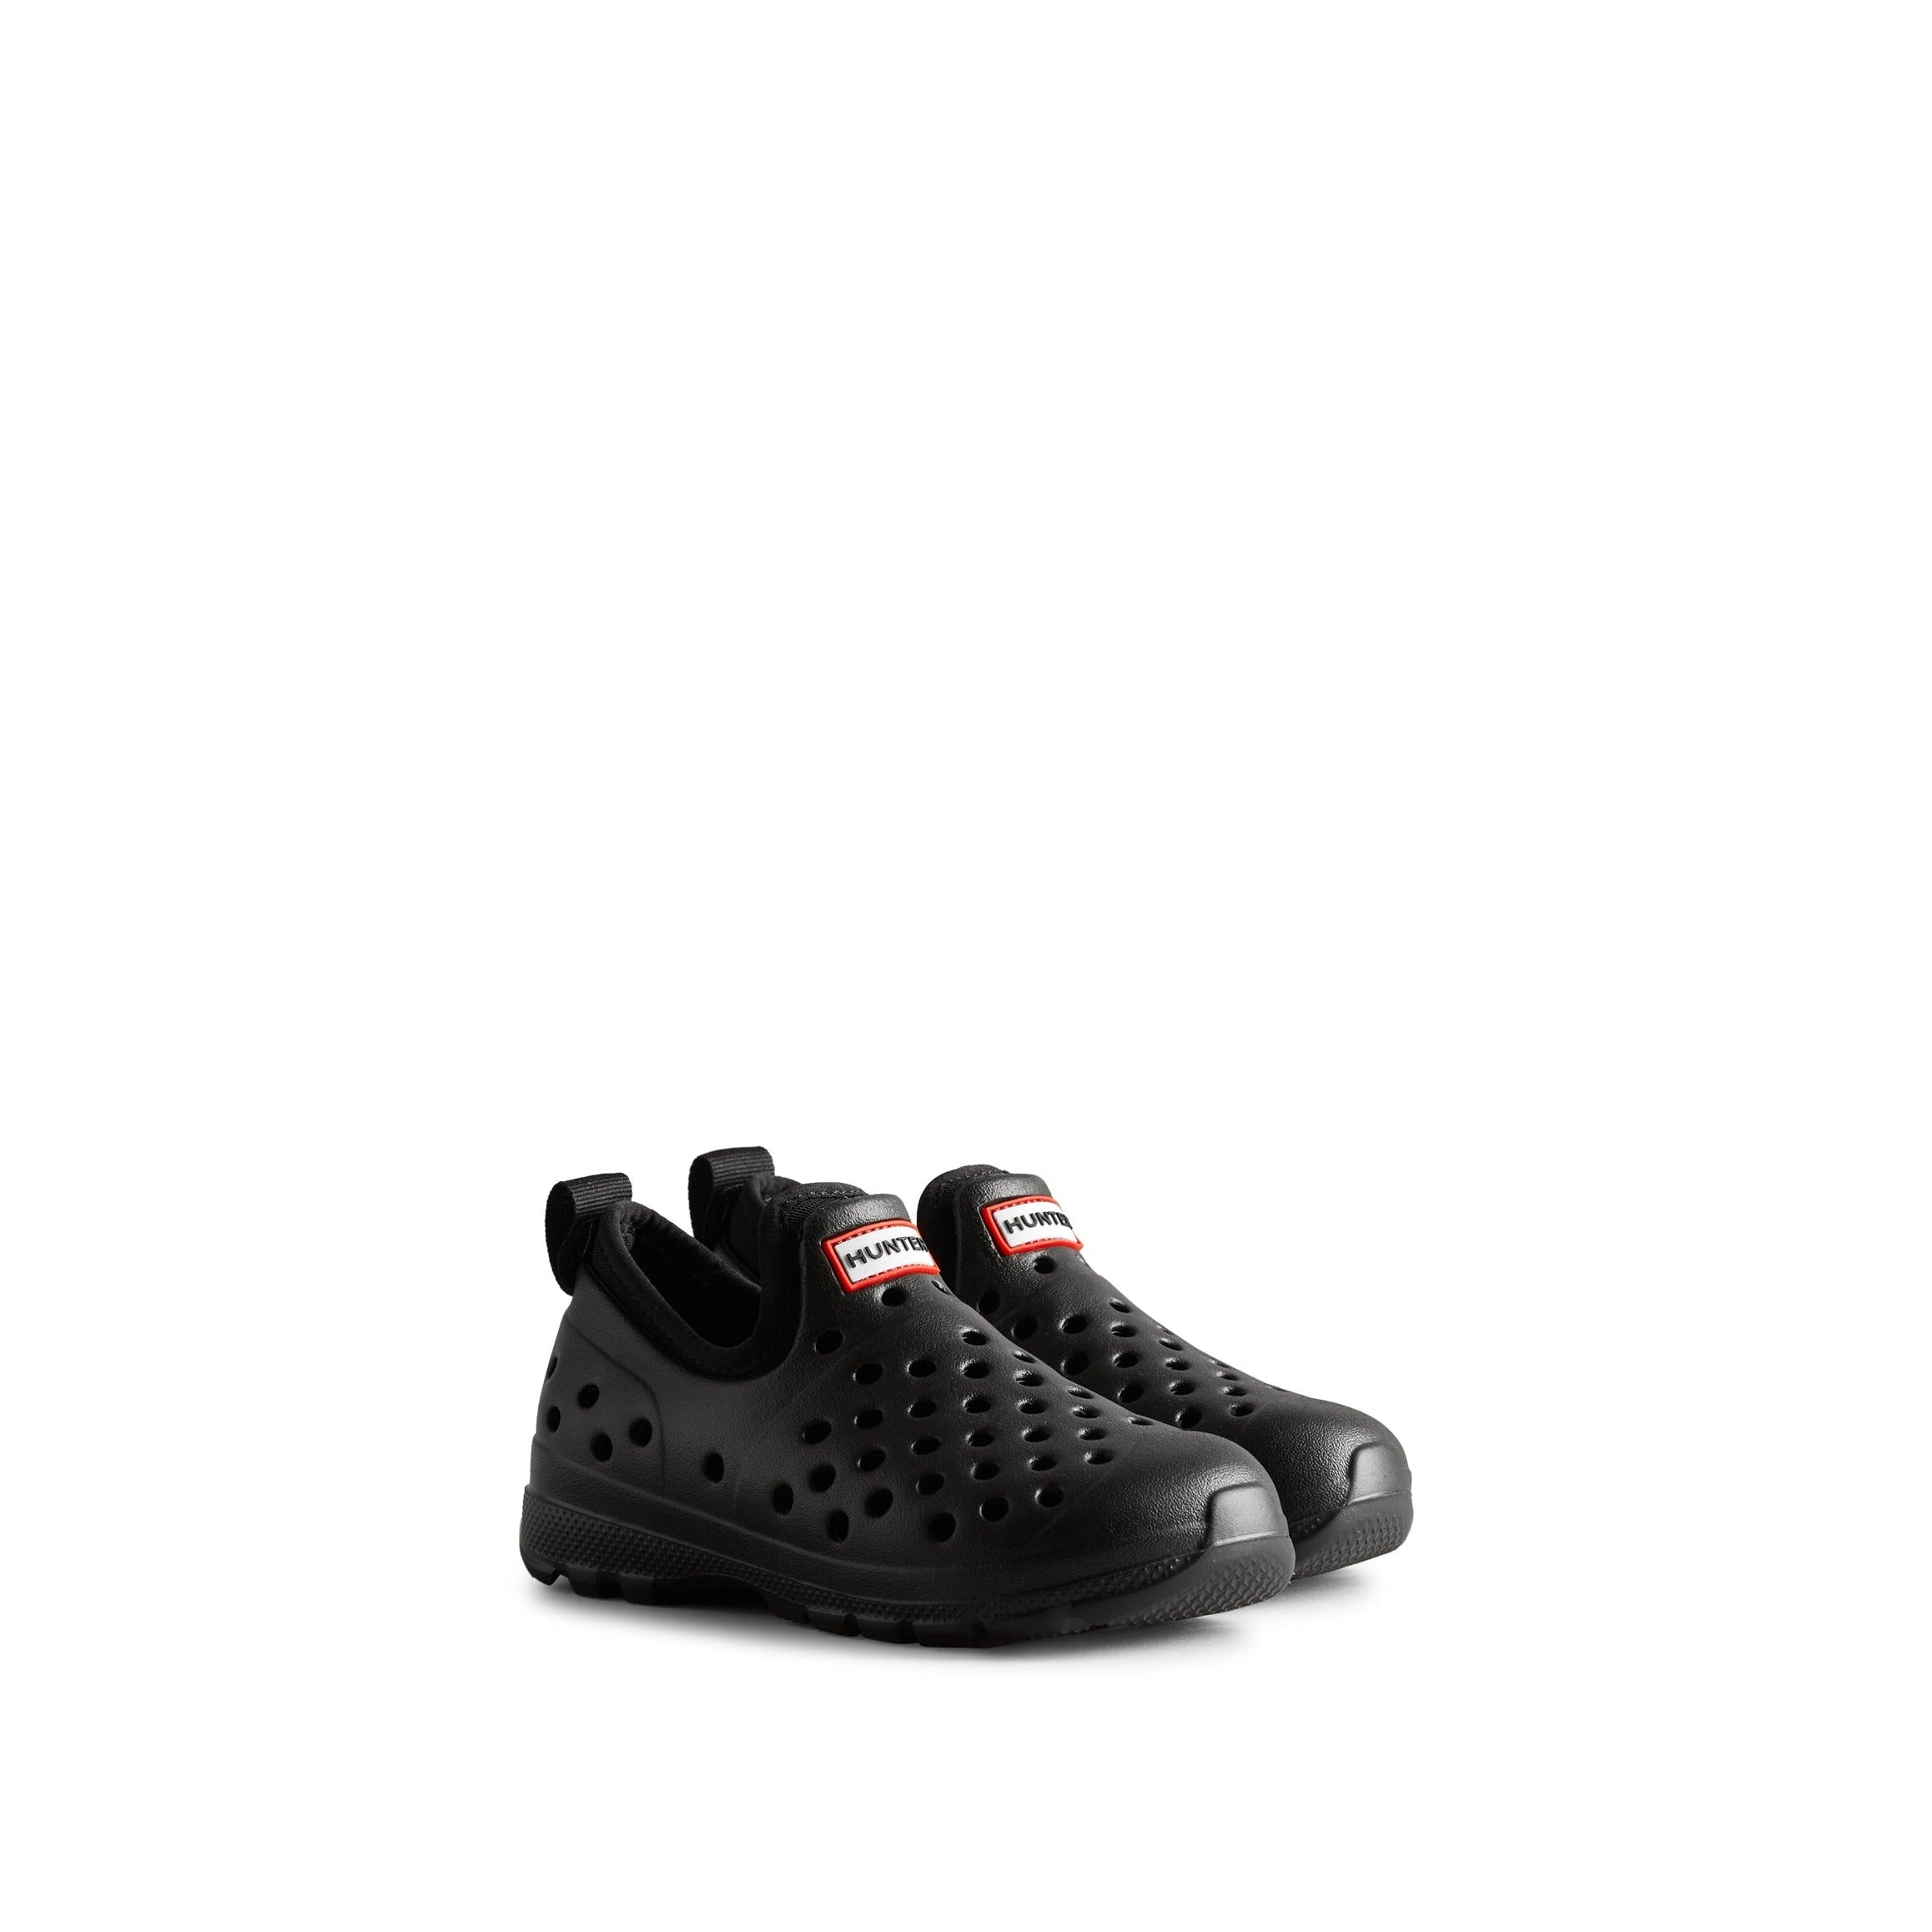 Sample UGG Little Kids Water Shoe Shoes   